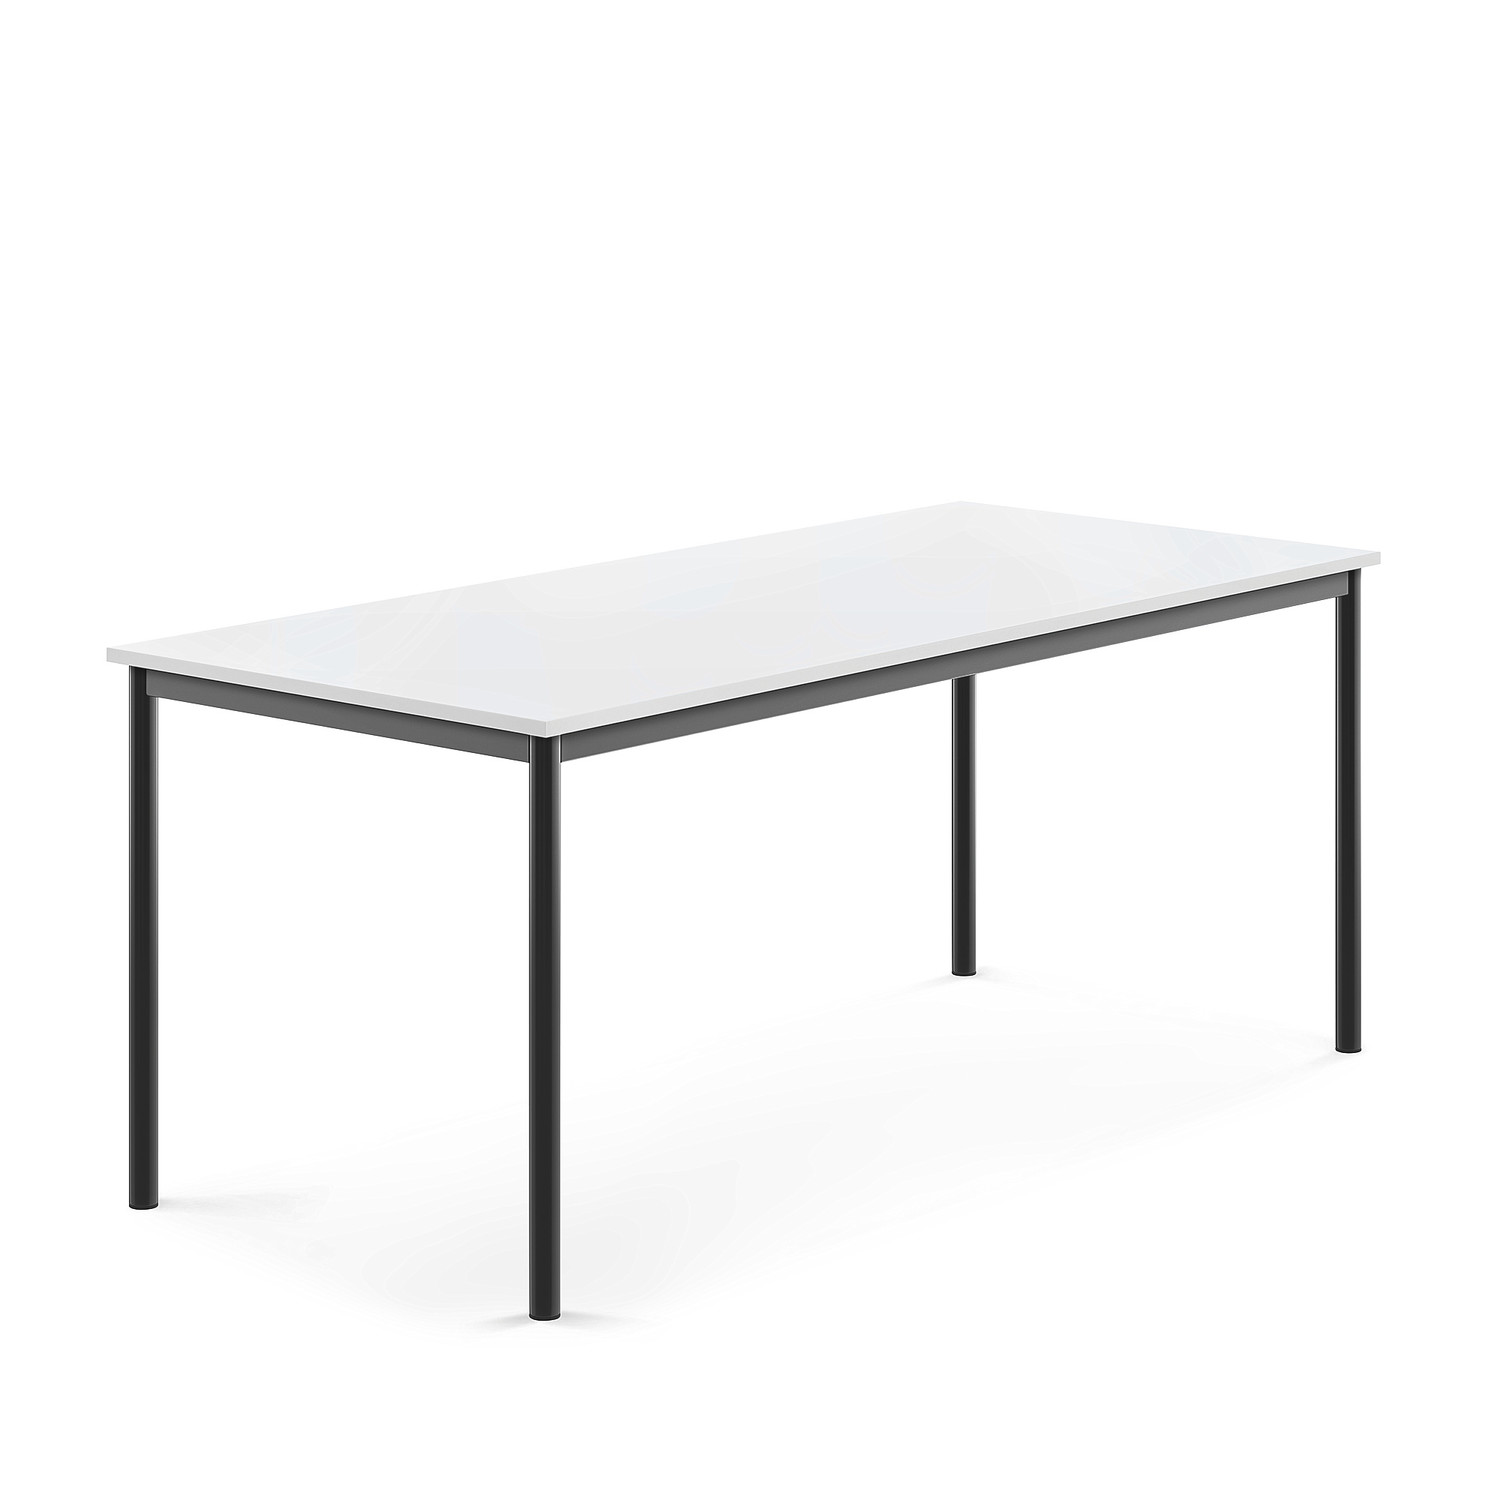 Stůl BORÅS, 1800x800x720 mm, antracitově šedé nohy, HPL deska, bílá